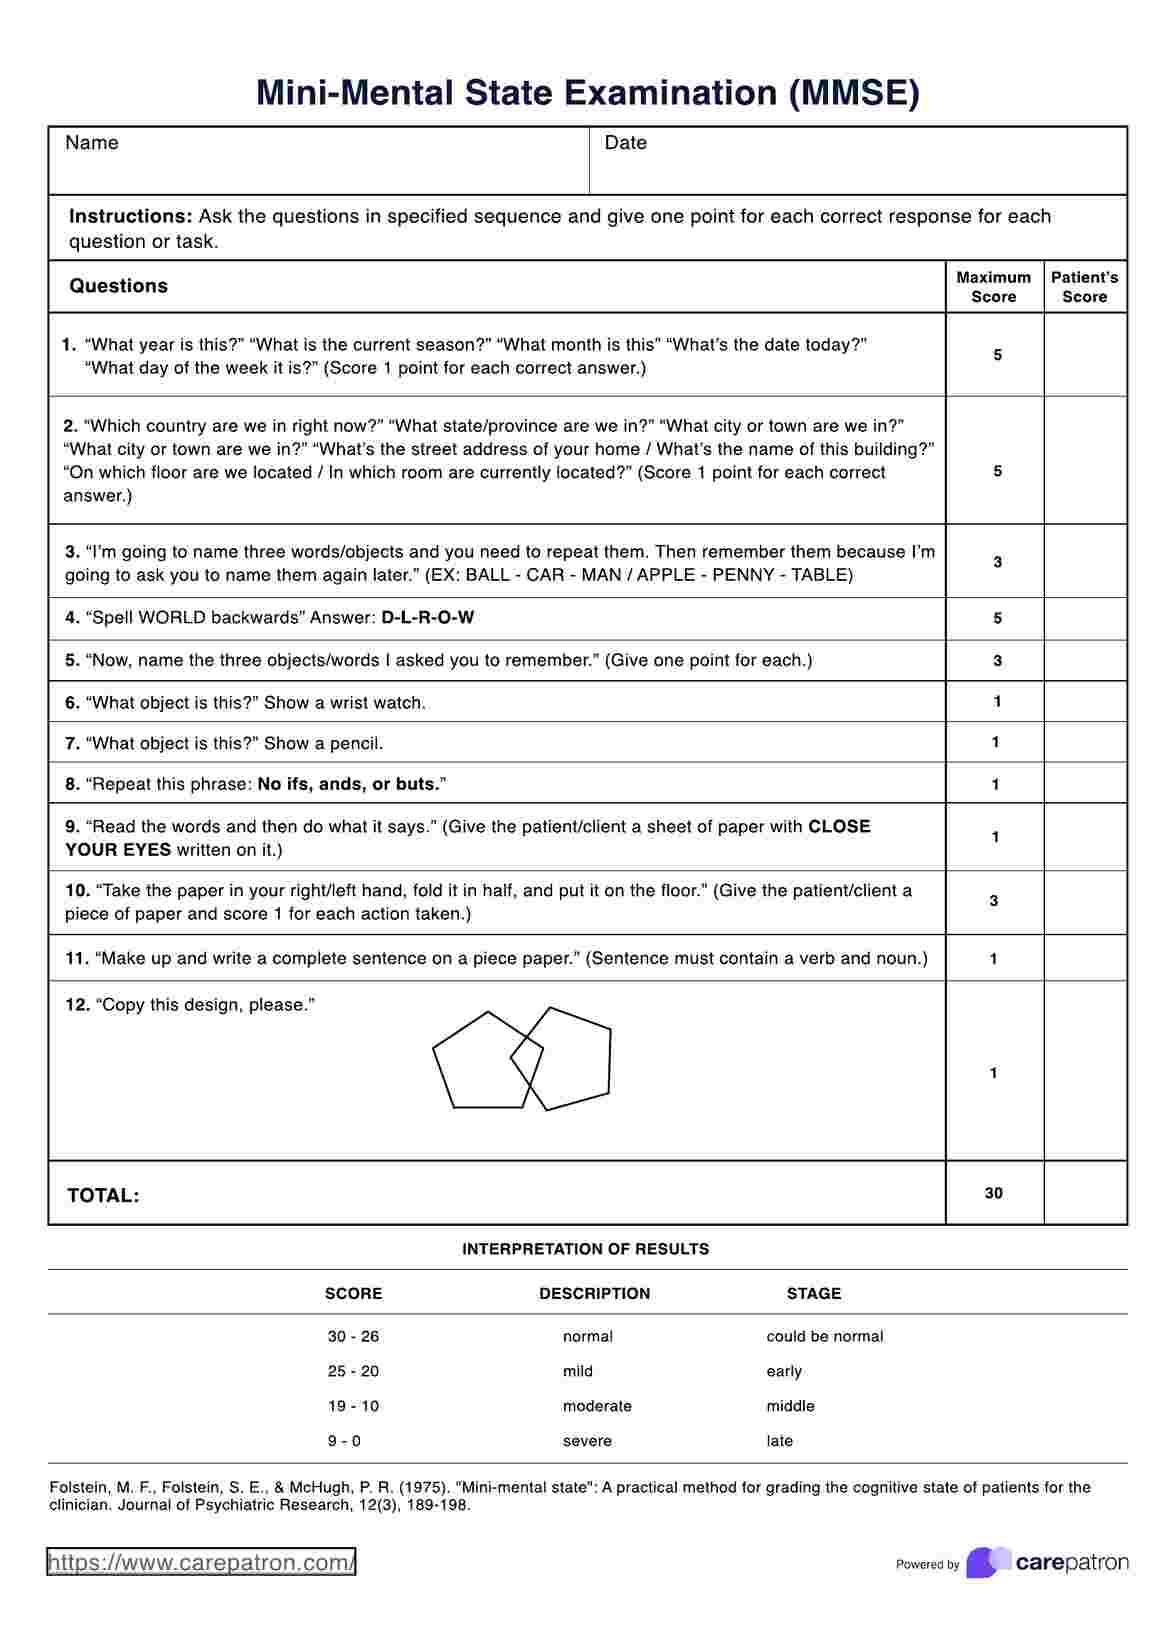 Mini Mental State Examinations PDF Example